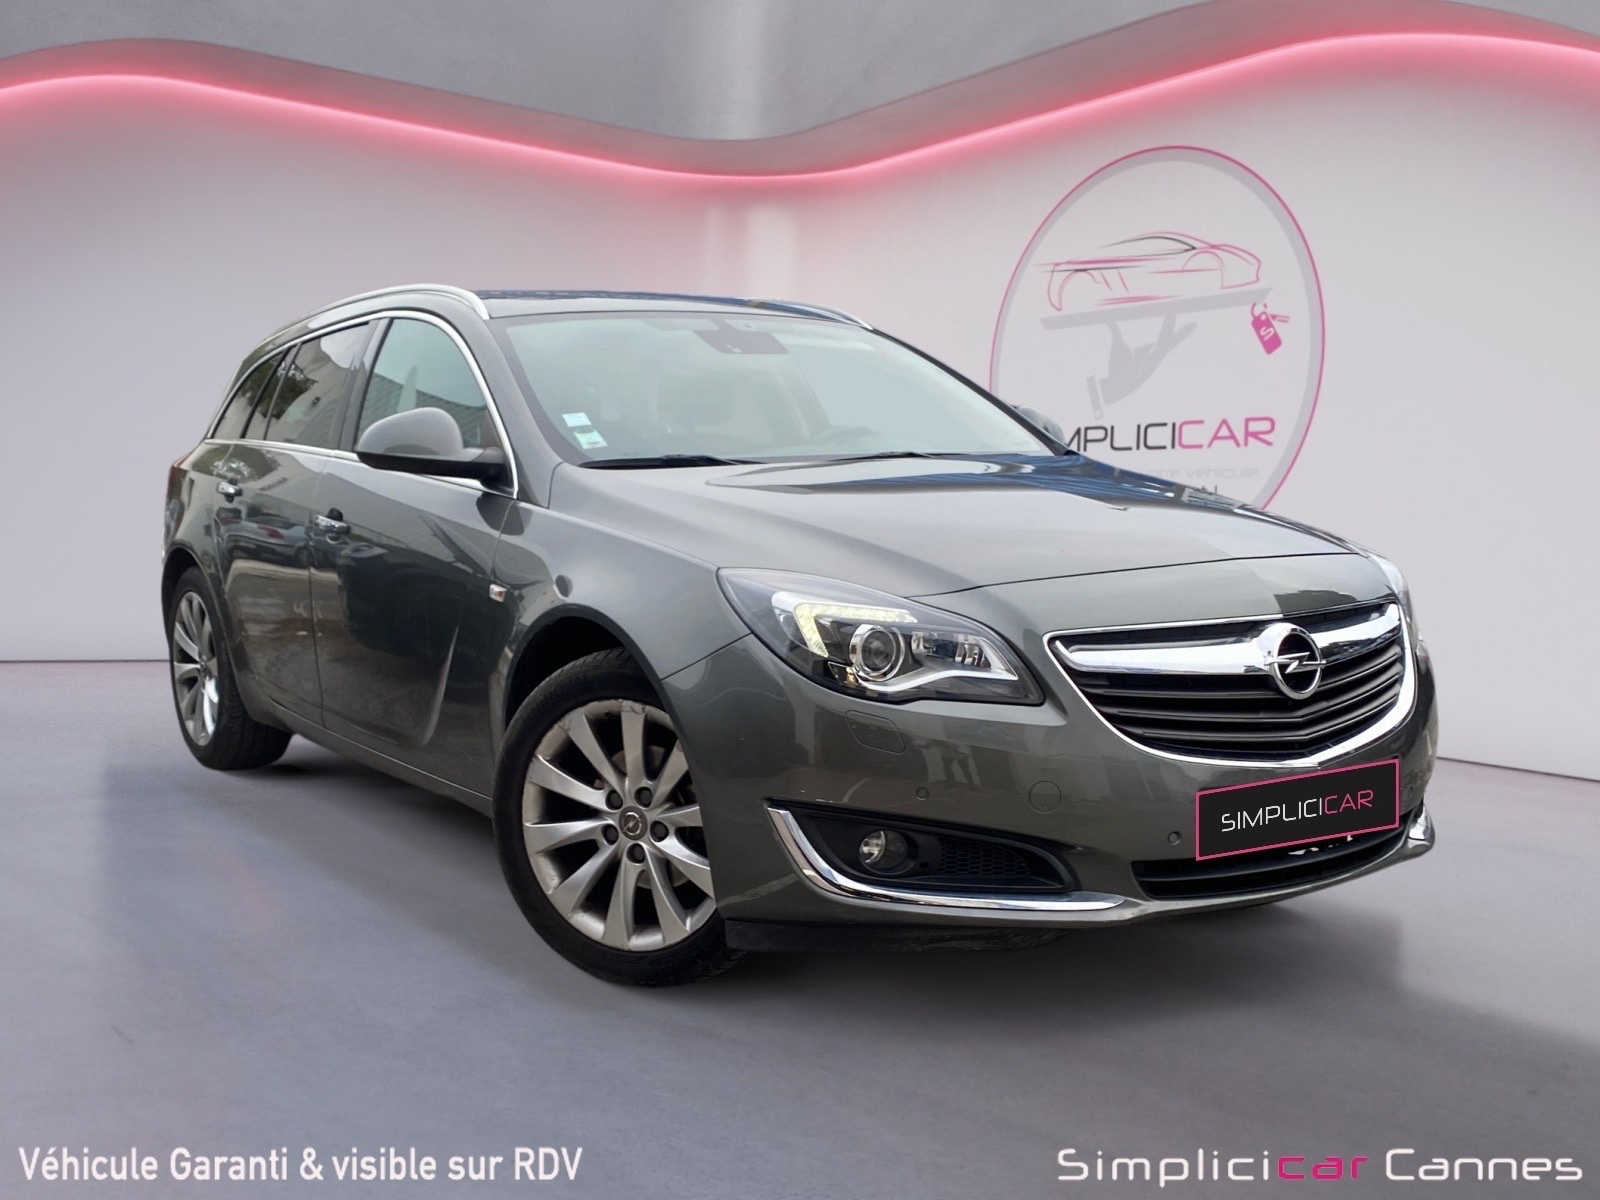 Opel Insignia elite occasion : annonces achat, vente de voitures